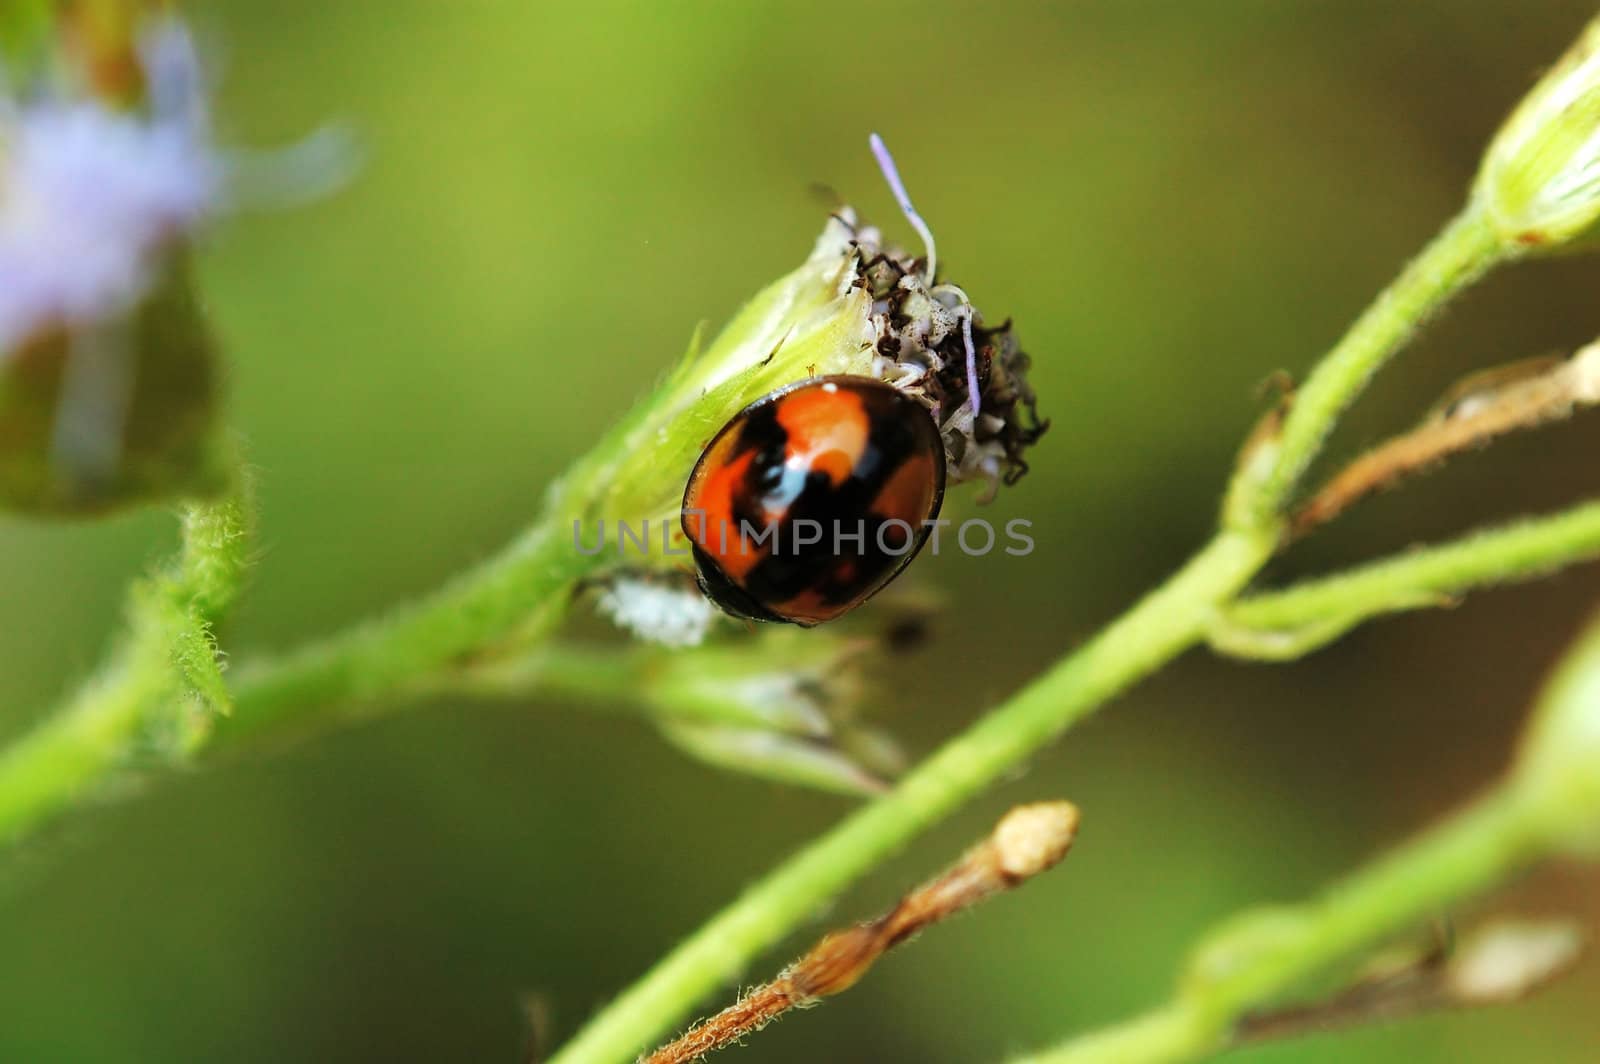 A ladybird resting on a eupatorium plant